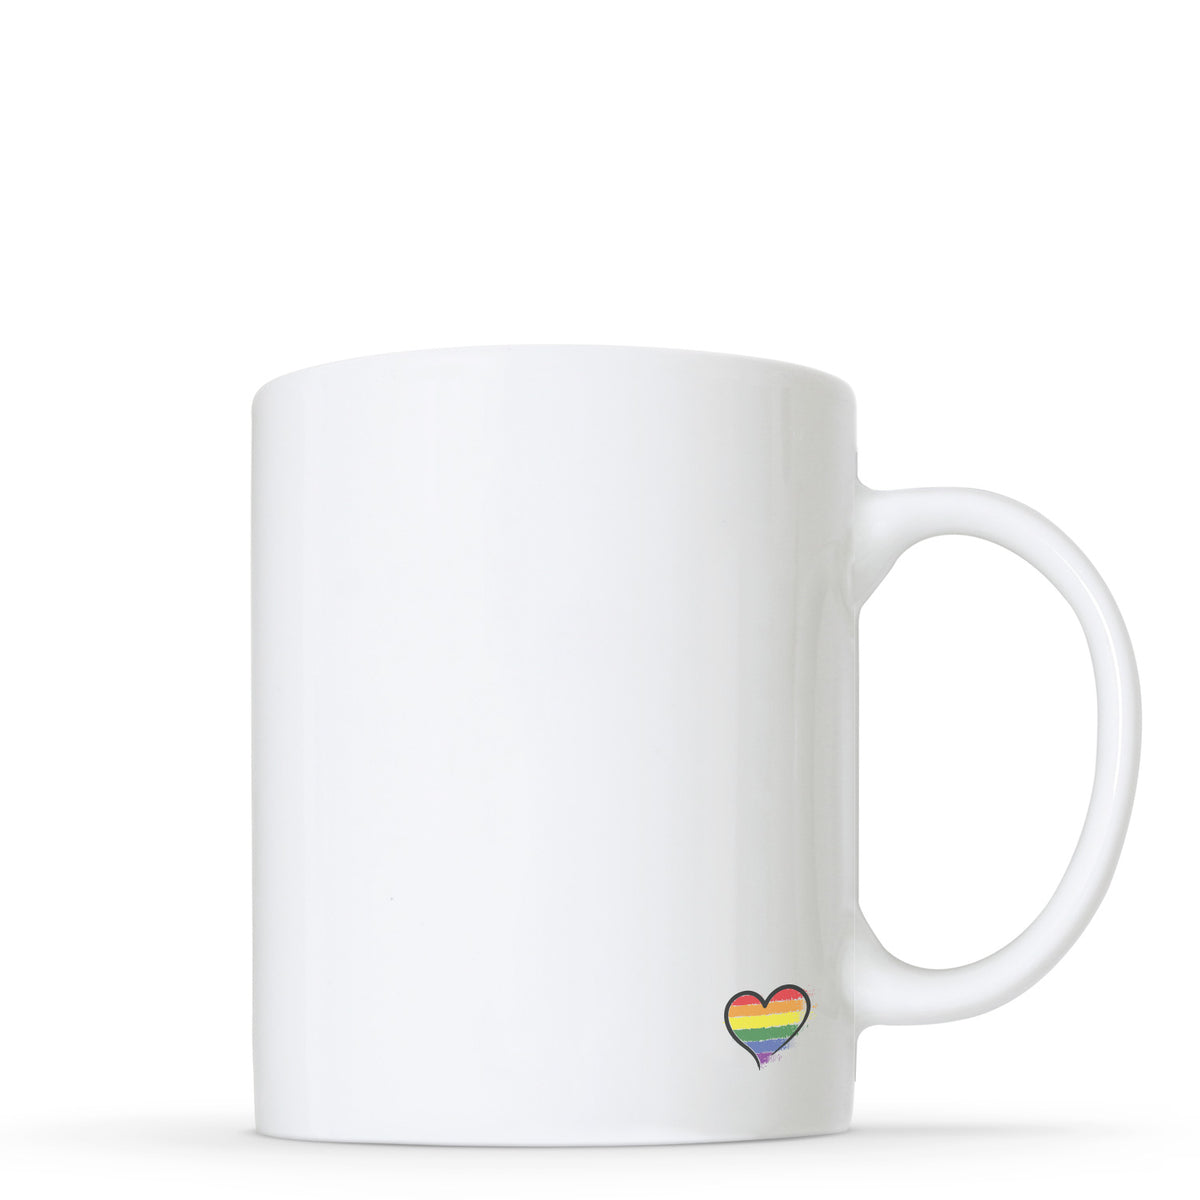 Hearts Not Parts - Pansexual Flag Heart Shape Mug | Gift